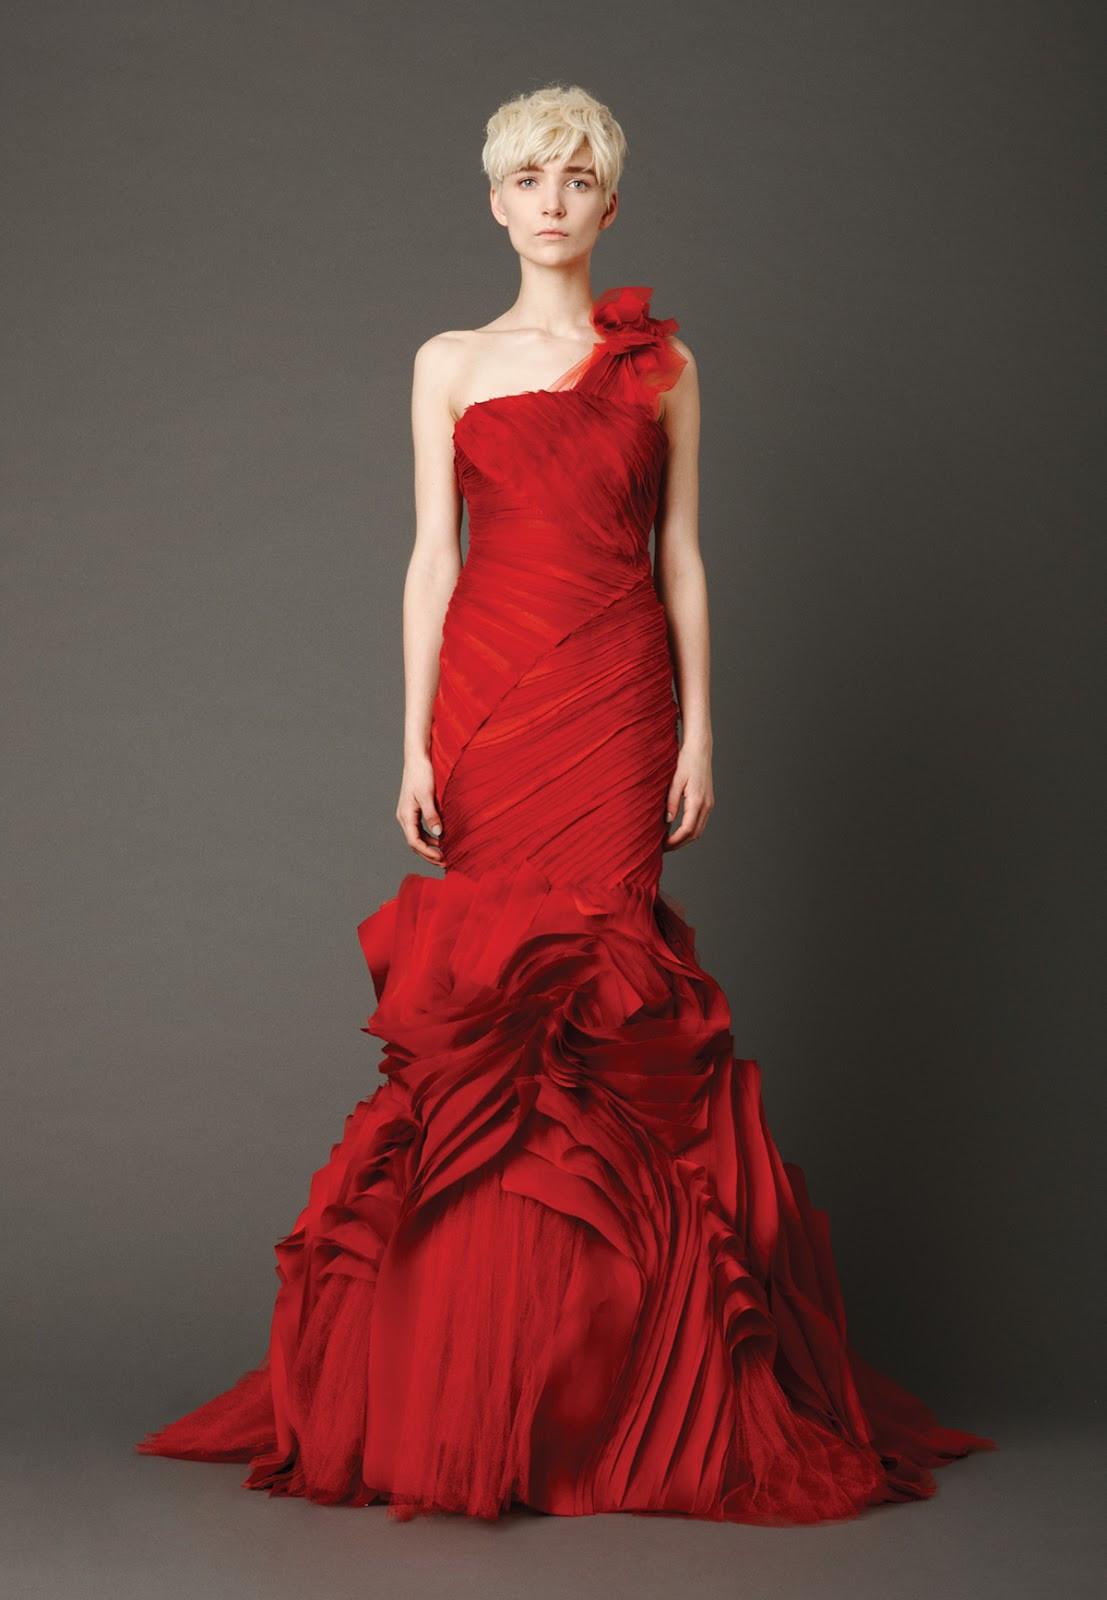 Red Mermaid Wedding Dress
 DressyBridal Learn Wedding Dresses 2013 Trends from Vera